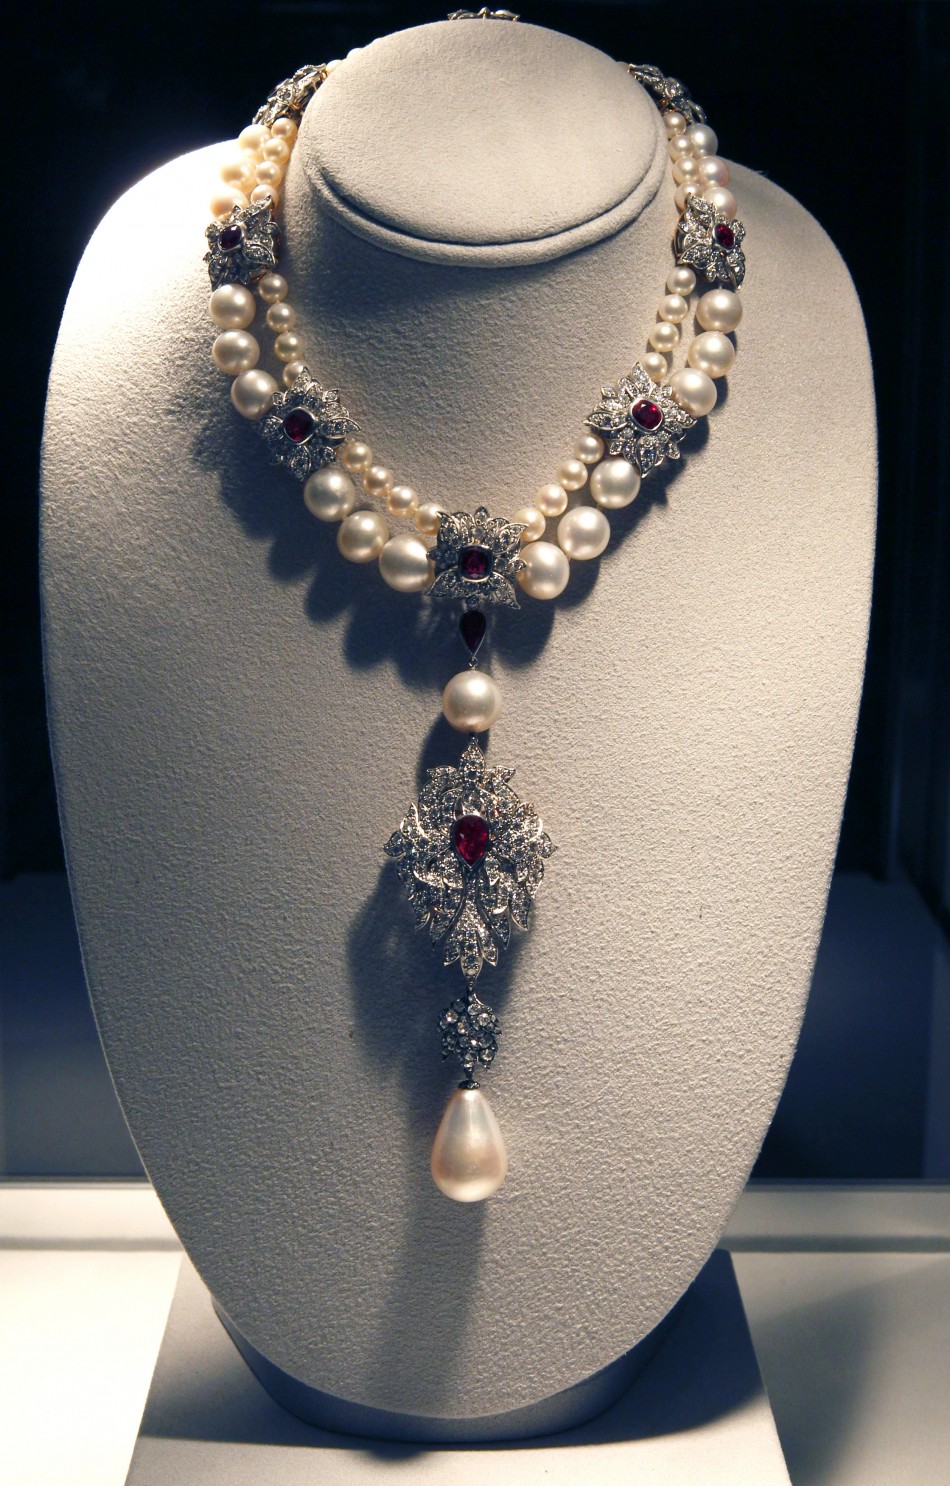 The legendary 16th century pearl, La Peregrina